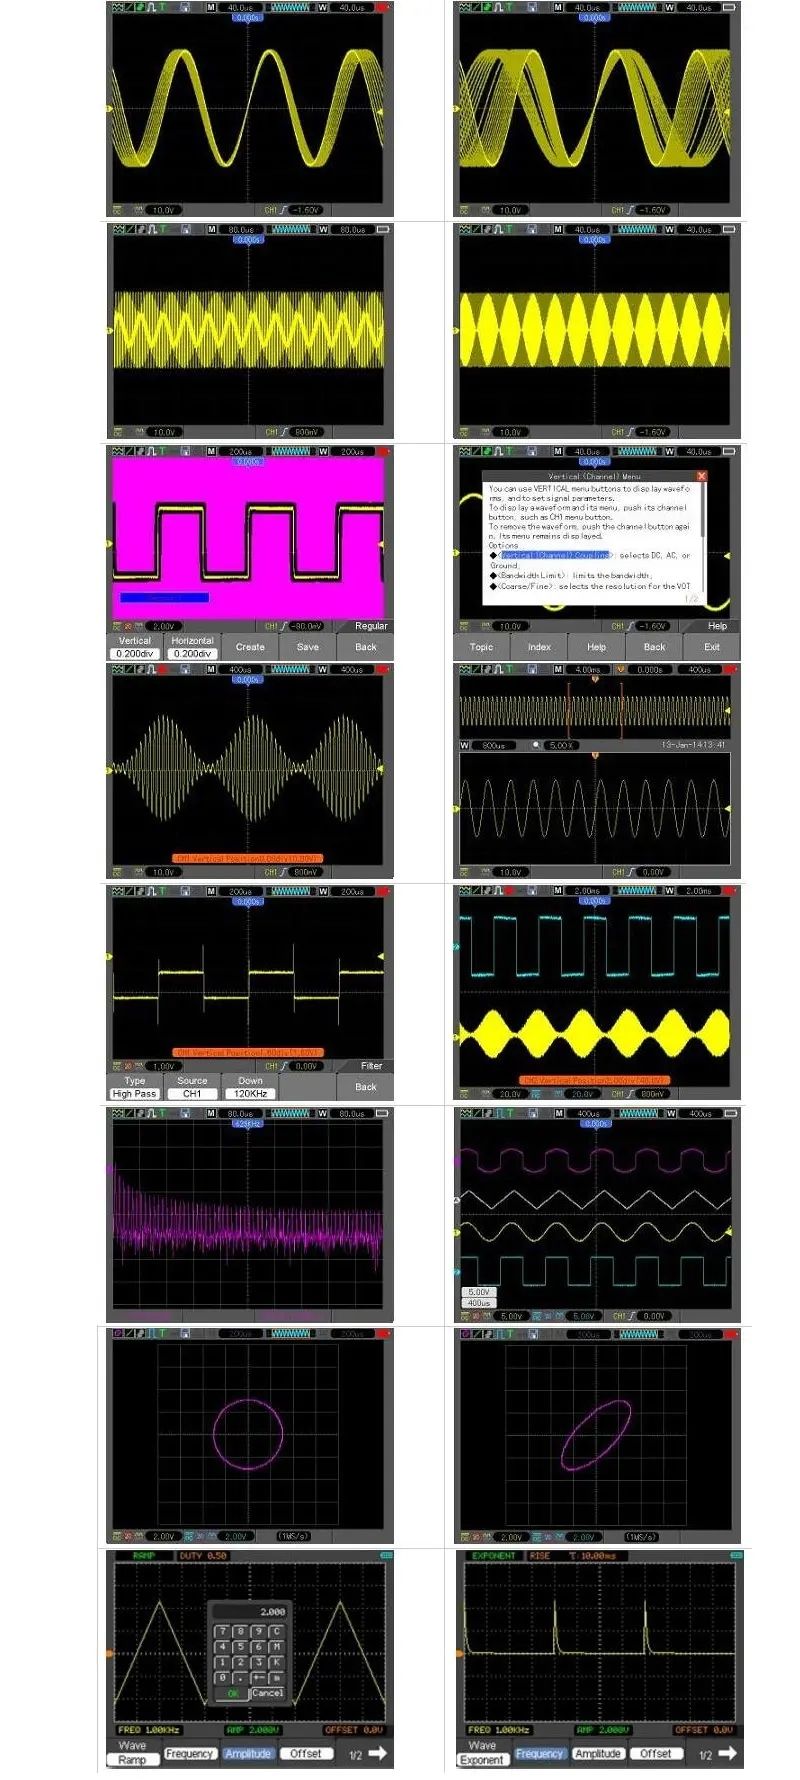 Hantek-DSO8202E-LAN-Interface-Oscilloscope-1GSas-Sample-Rate-Large-56-inch-TFT-Color-LCD-Display-Osc-1742282